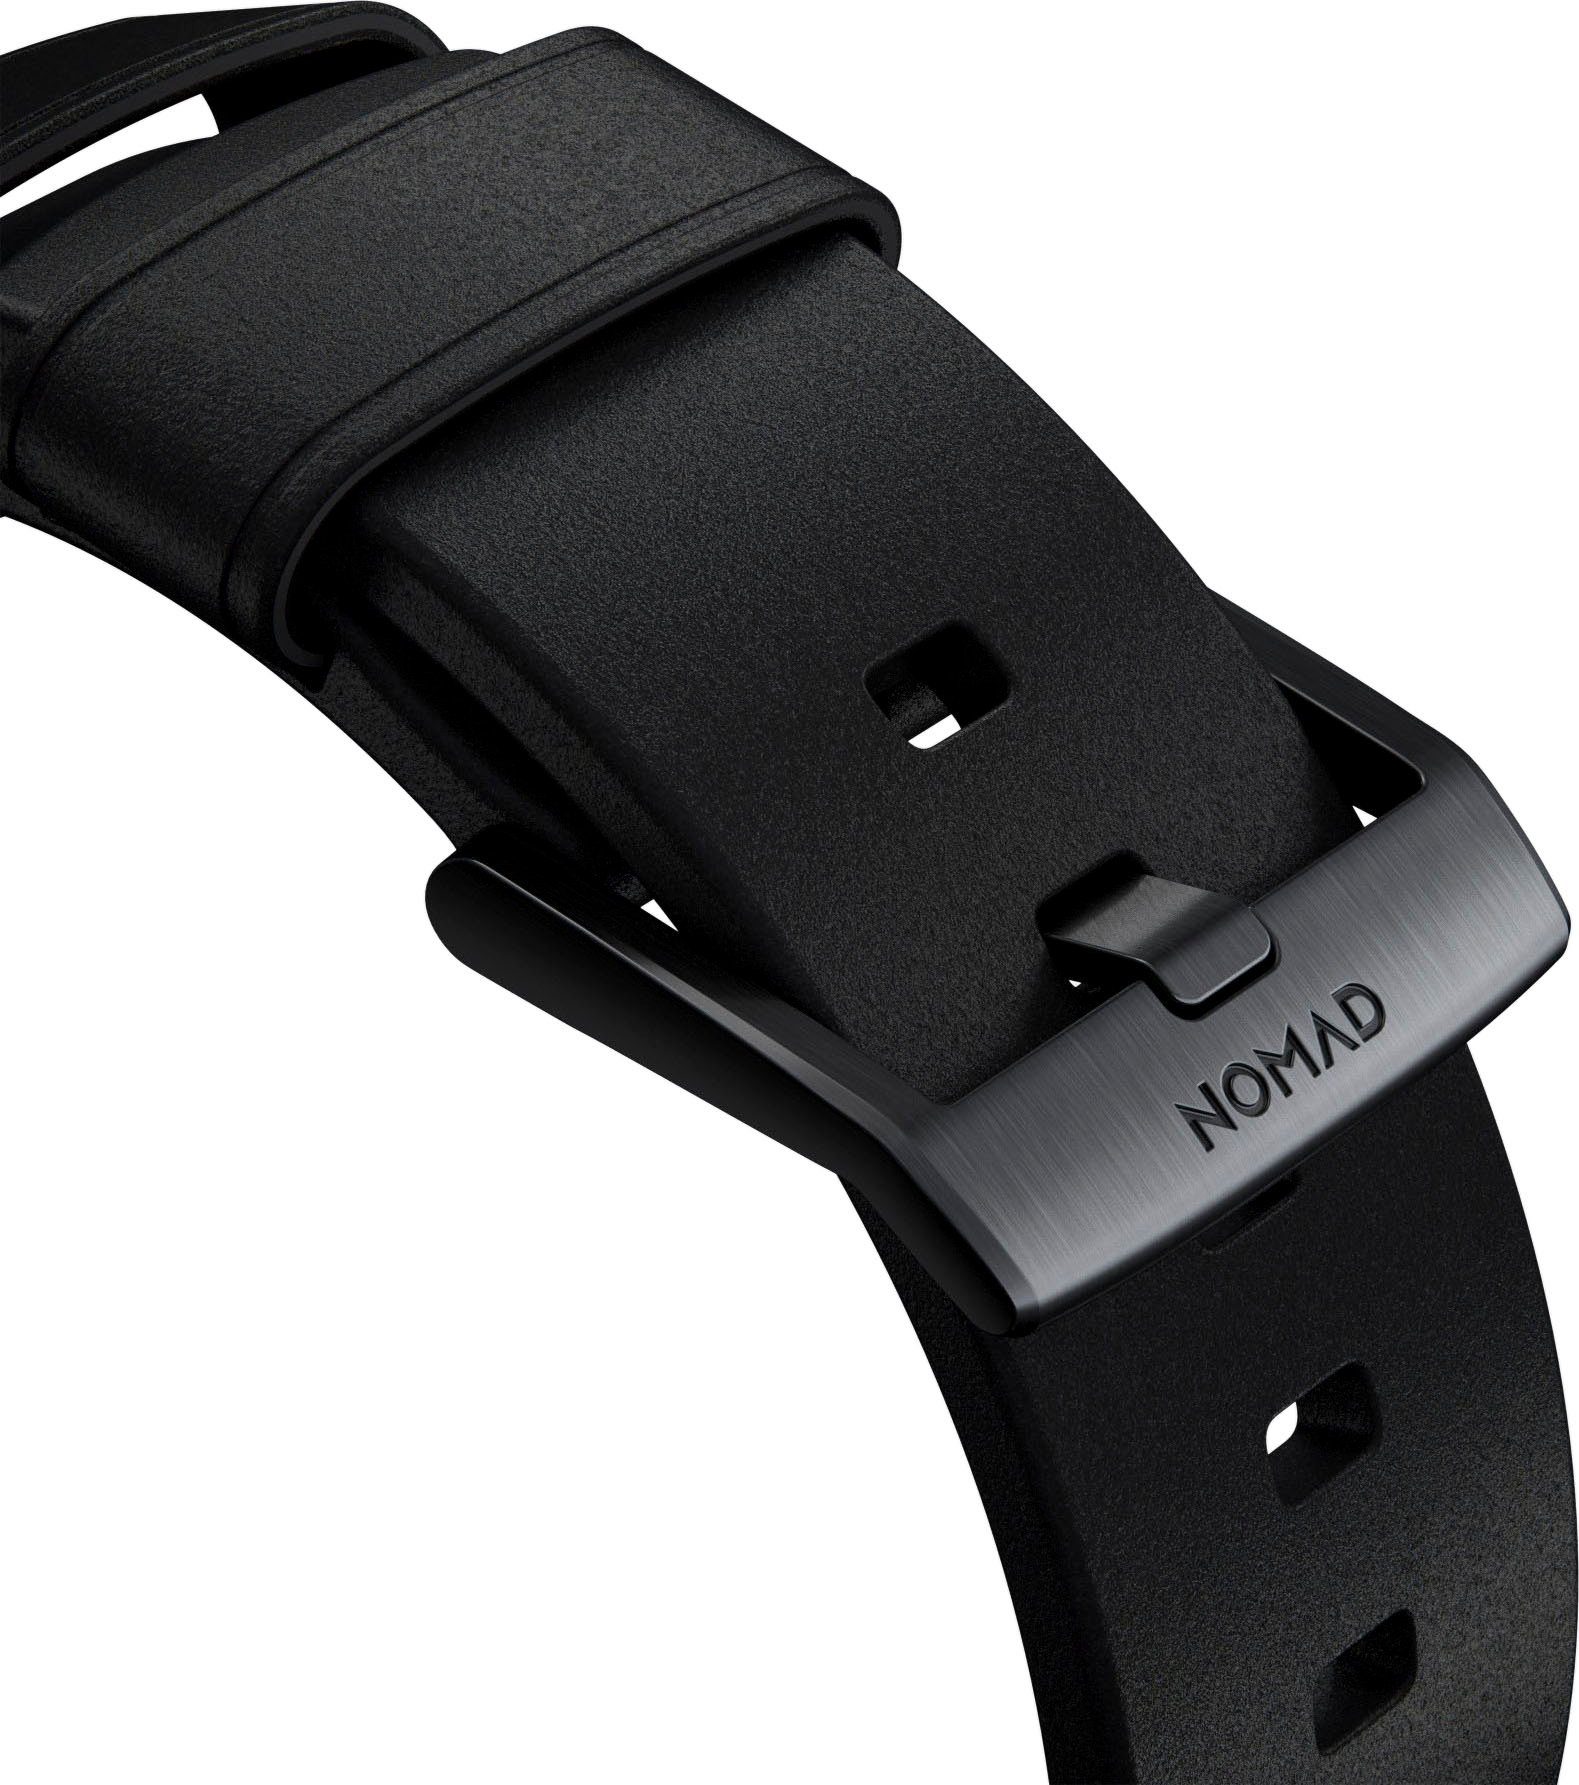 Nomad Band Smartwatch-Armband Modern